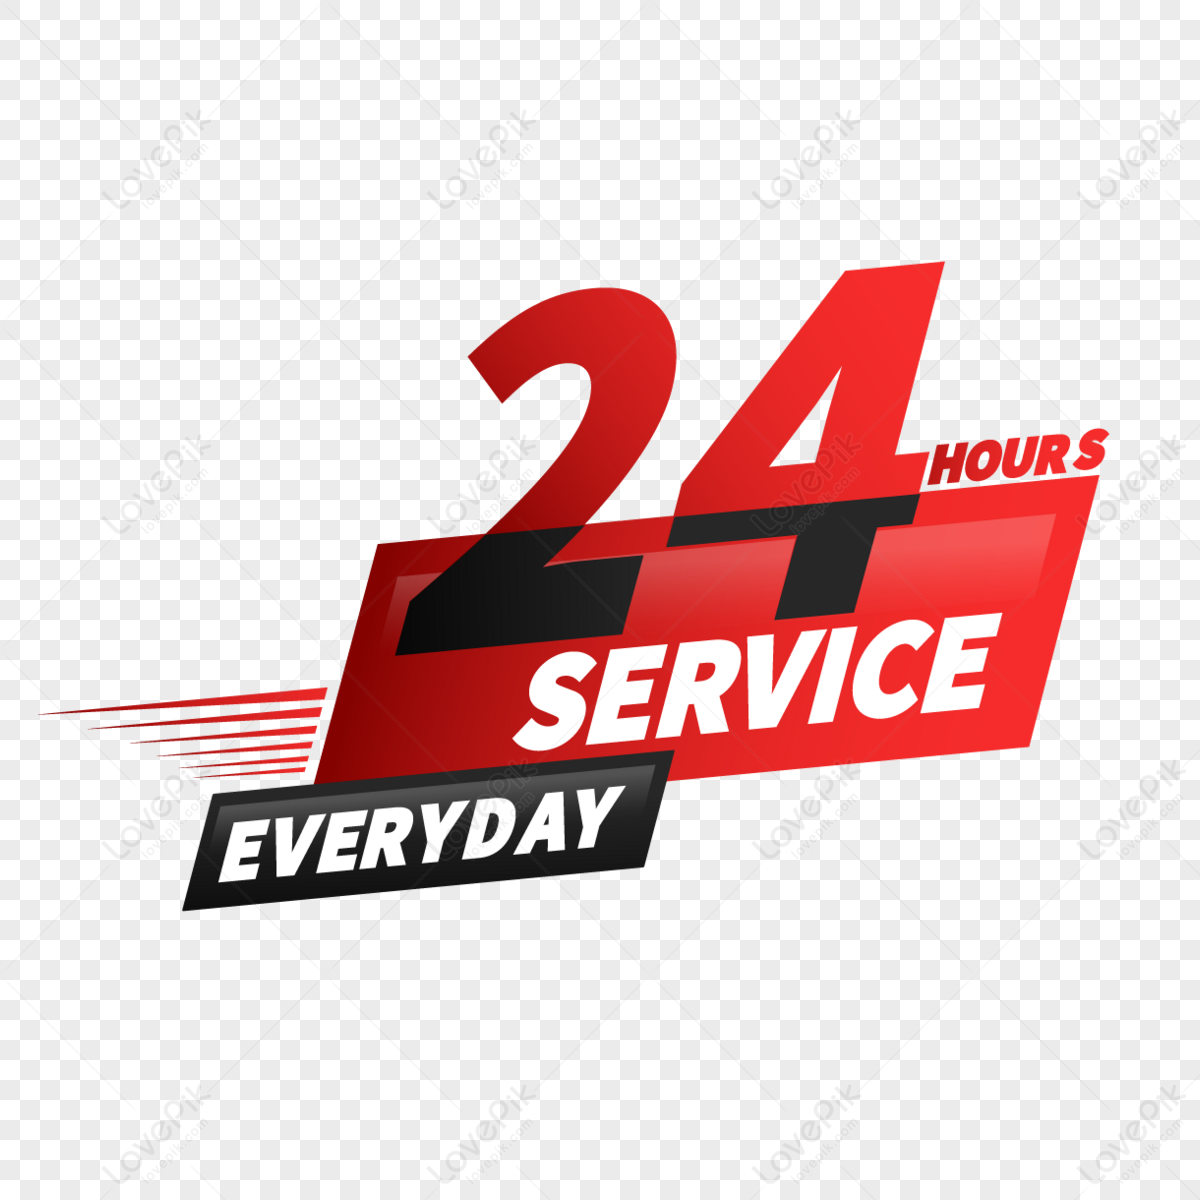 Breaking news 24 7 Logo PNG Transparent & SVG Vector - Freebie Supply